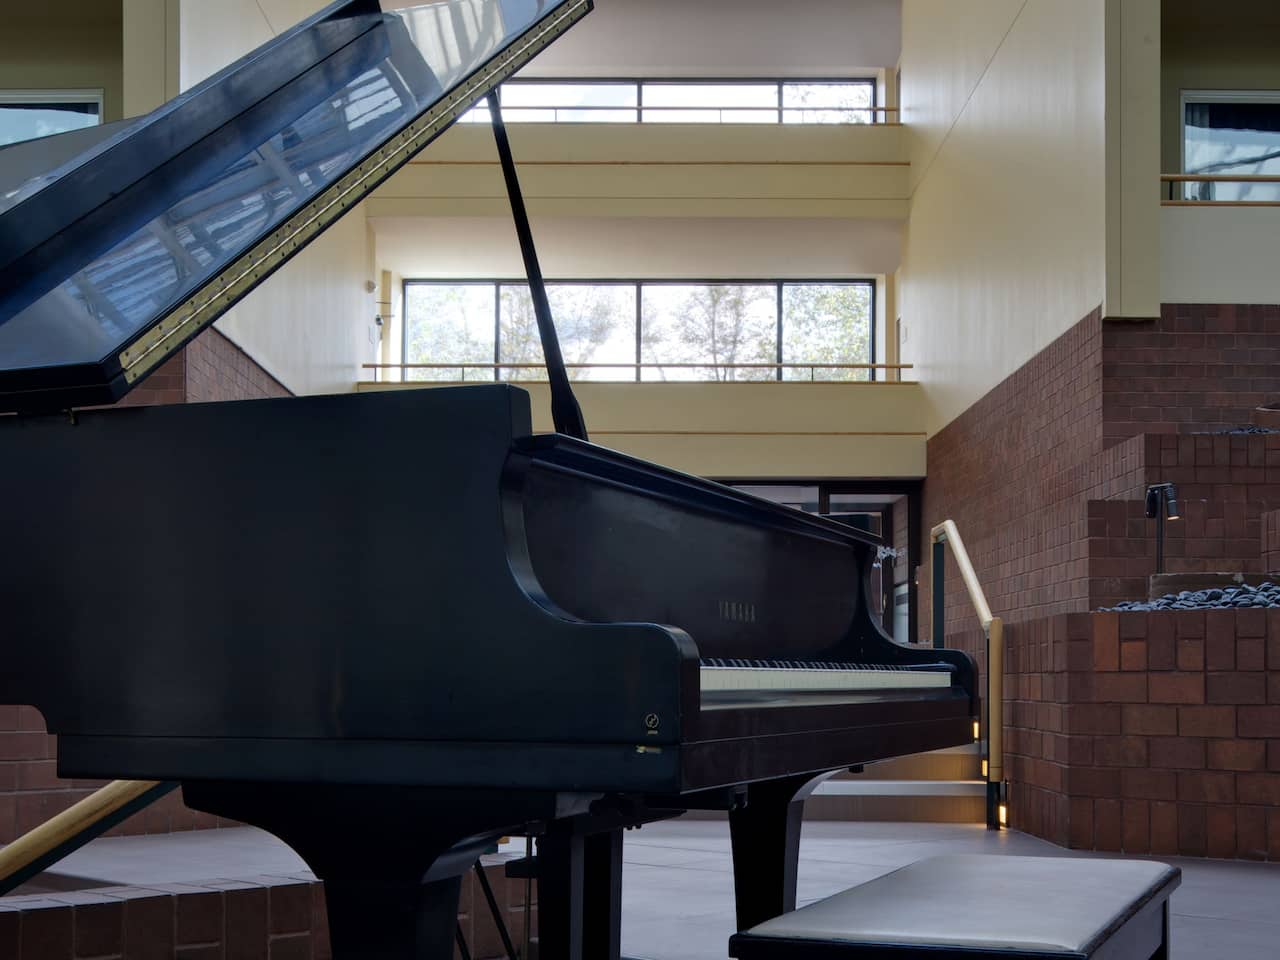 Grand piano in hotel atrium